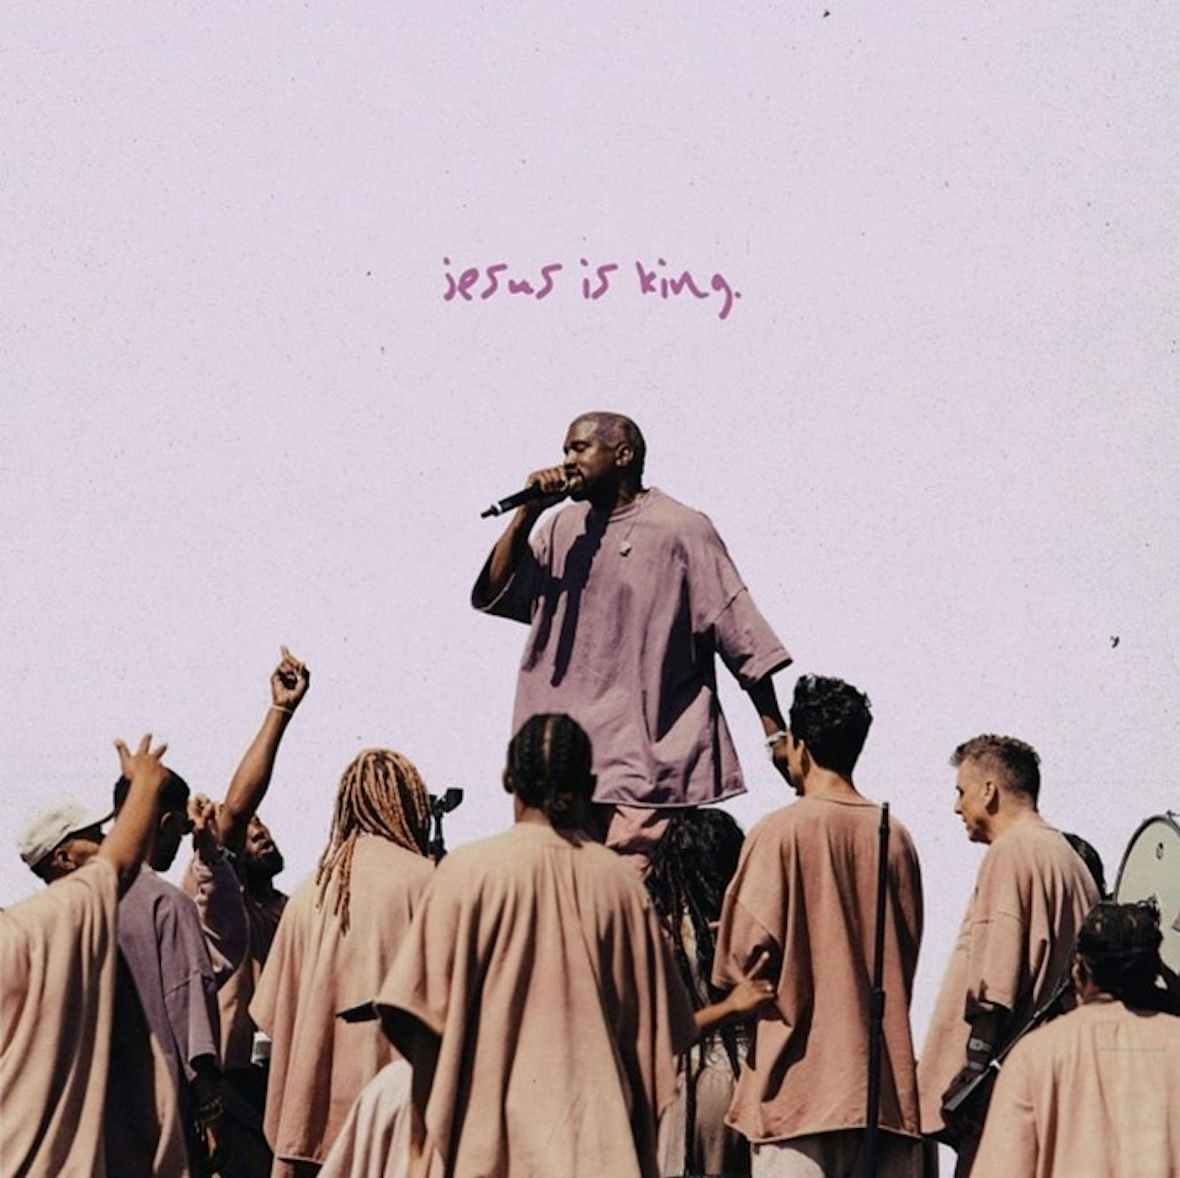 Kanye West Jesus Is King Vinyl Blue - US